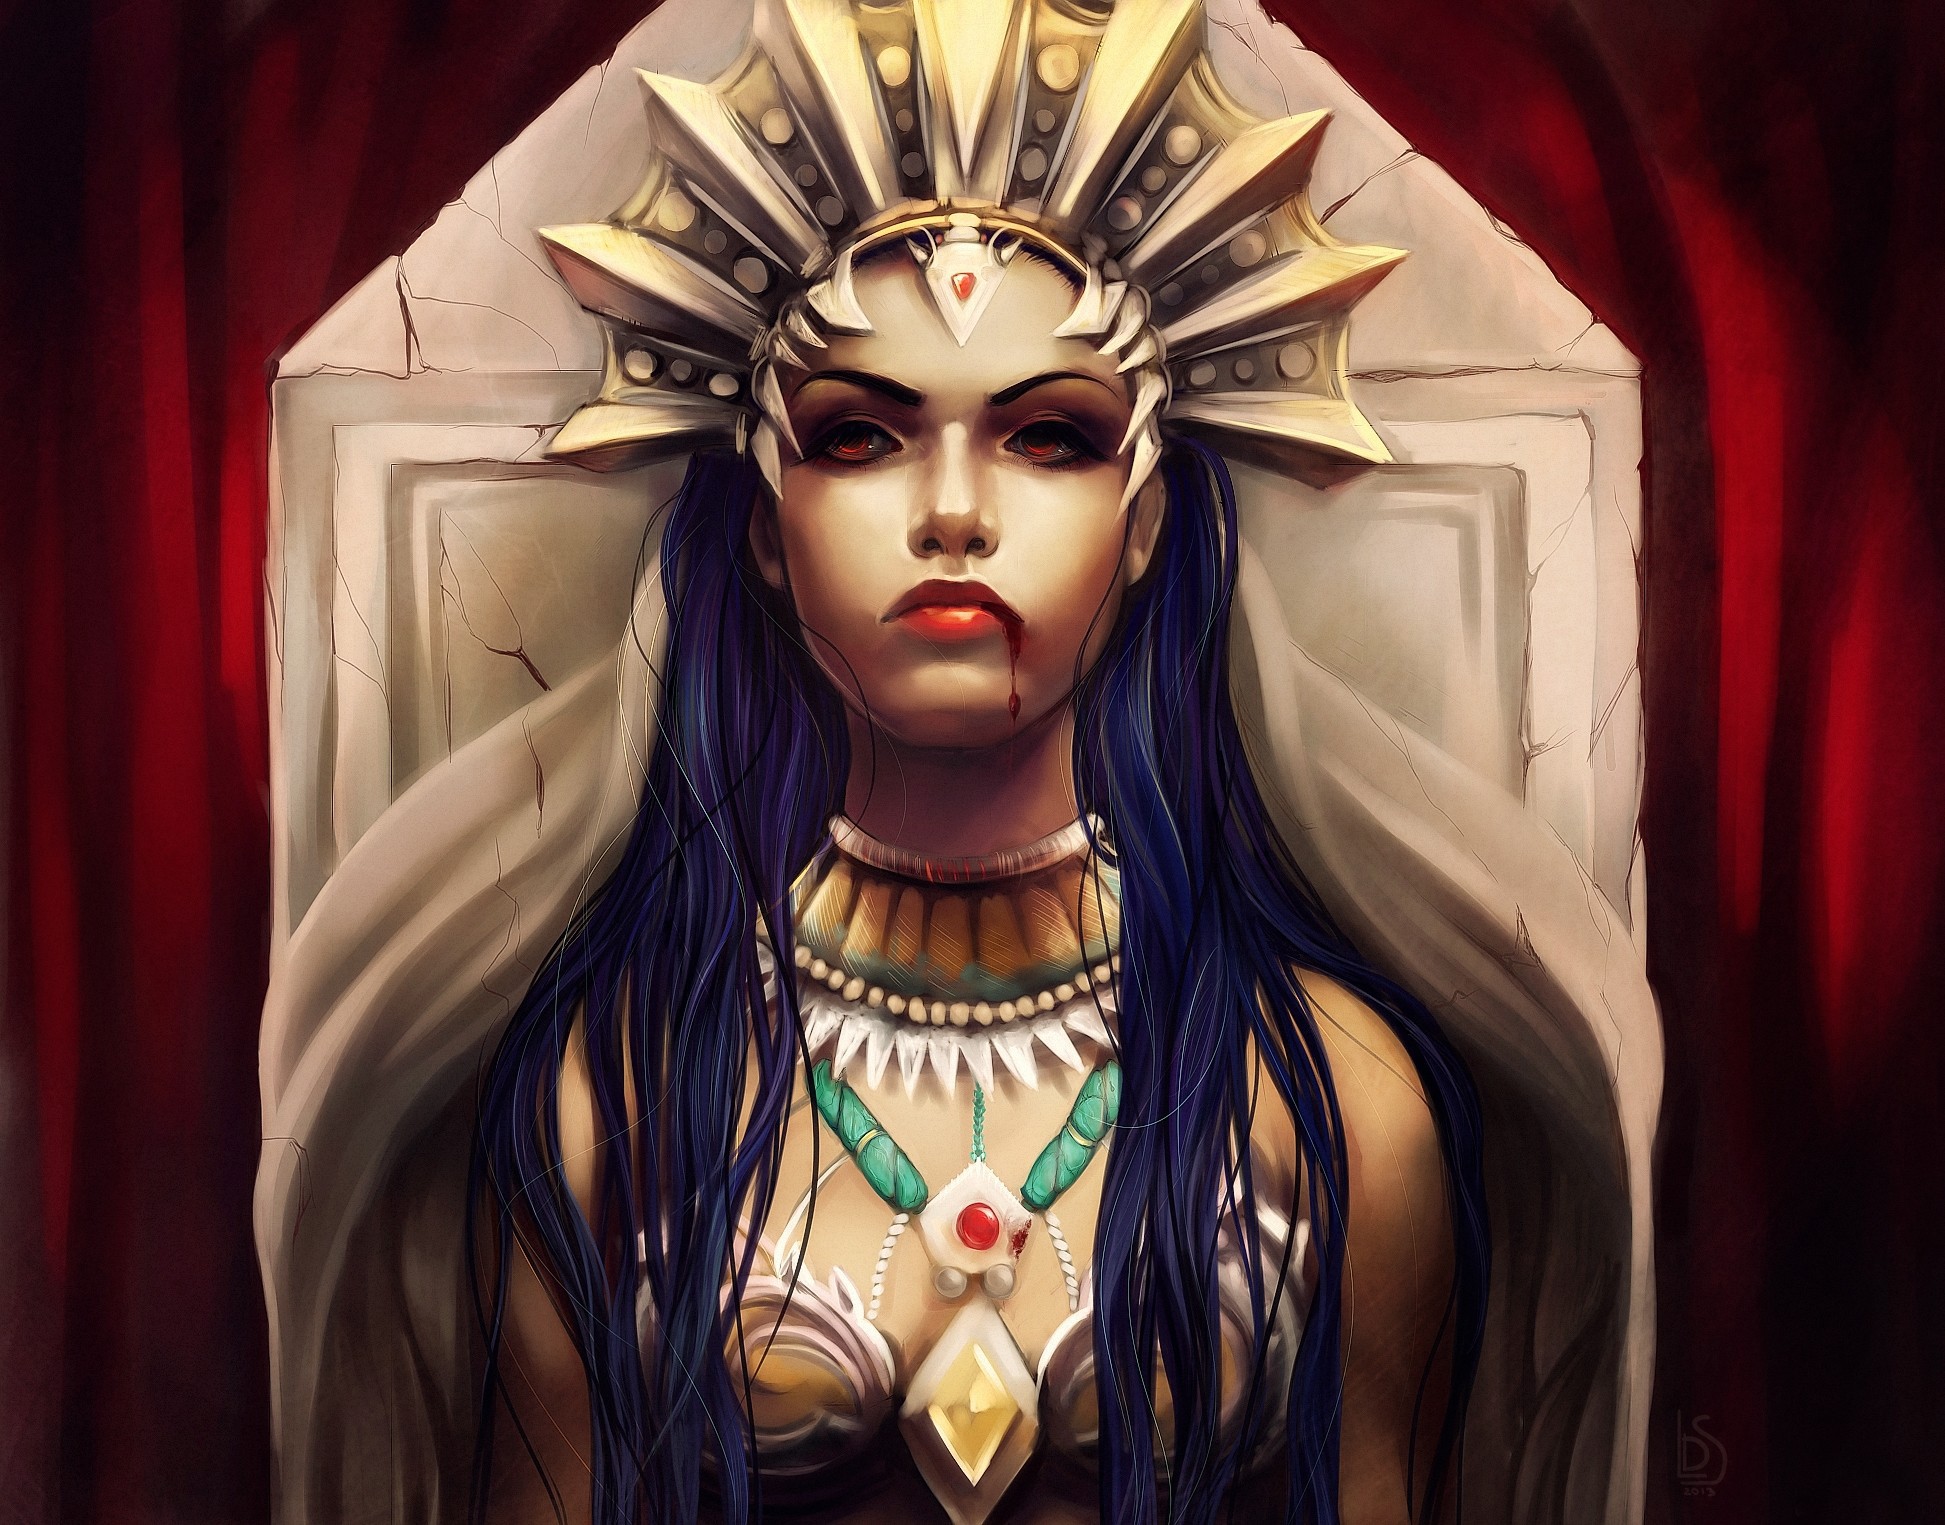 General 1945x1525 throne fantasy art women fantasy girl Queen of the damned vampires blood purple hair red eyes long hair digital art